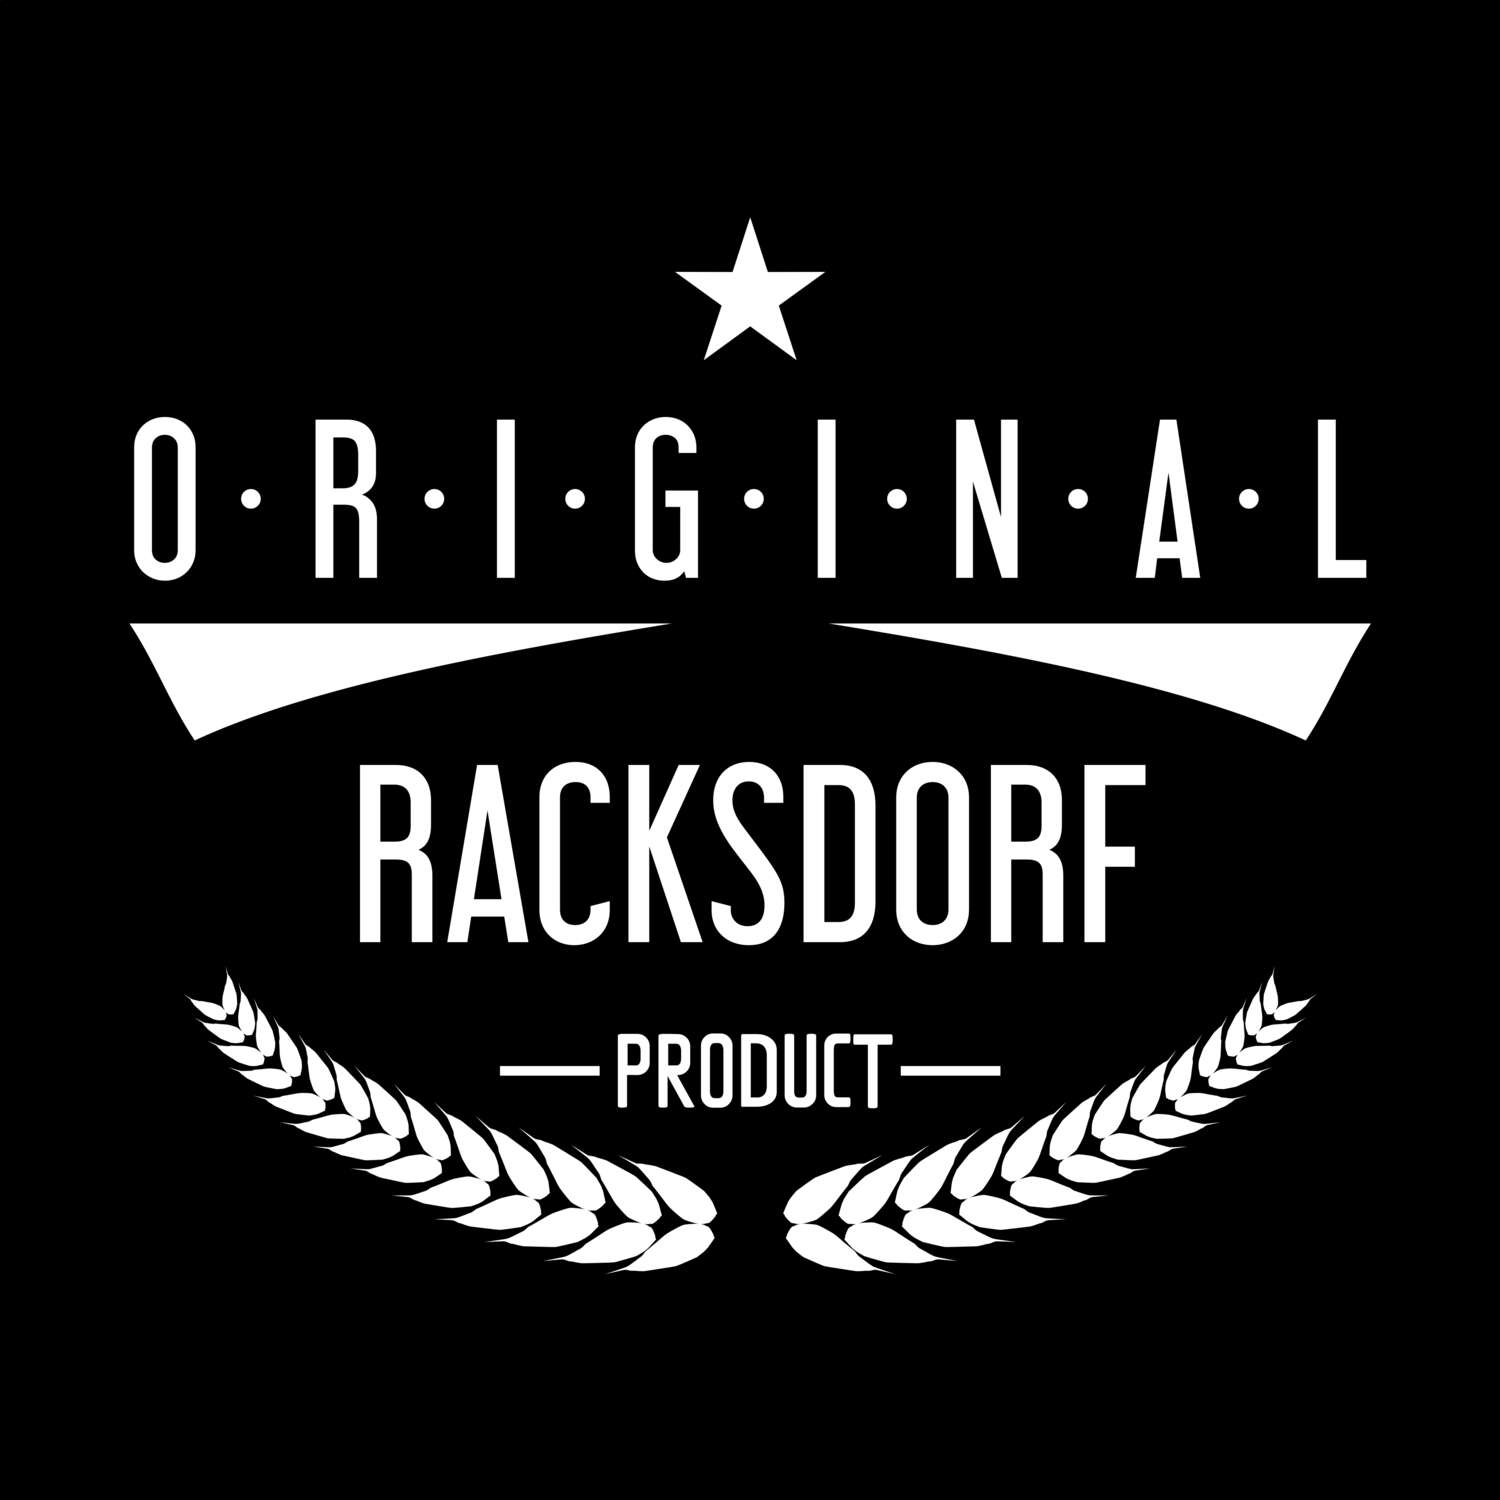 Racksdorf T-Shirt »Original Product«